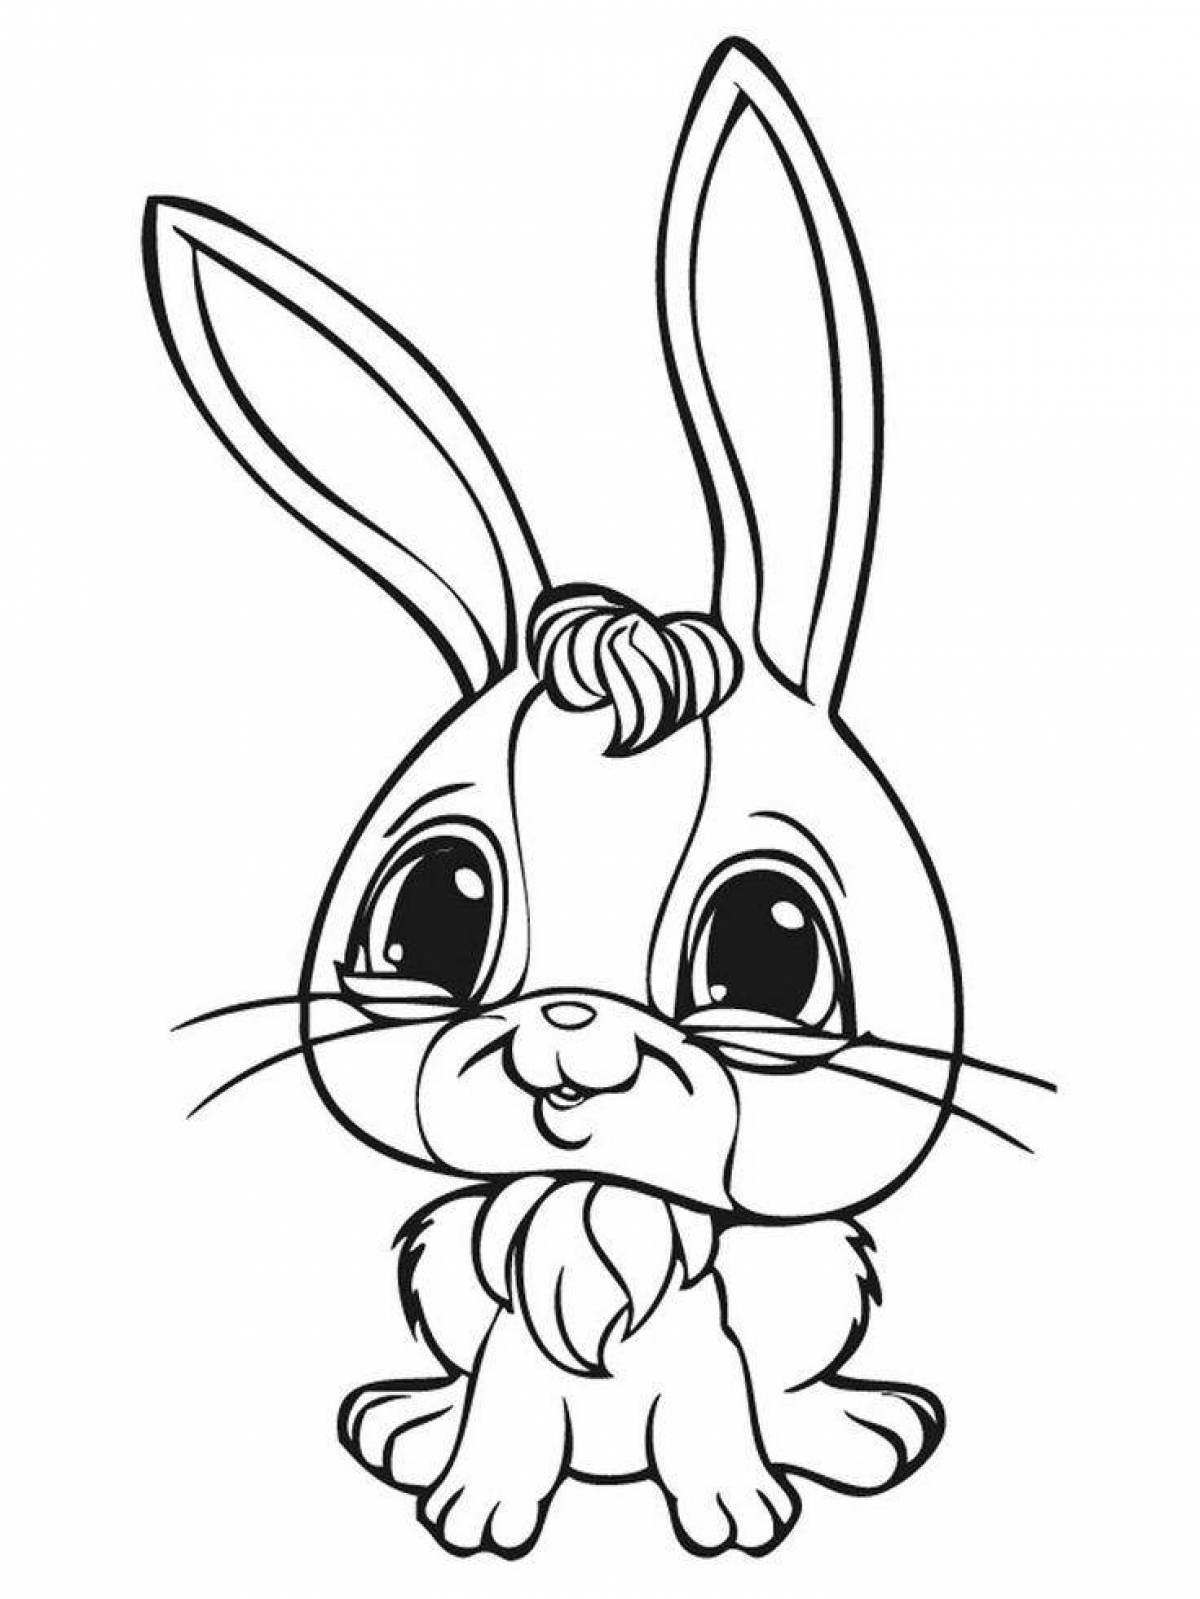 Fun rabbit coloring book